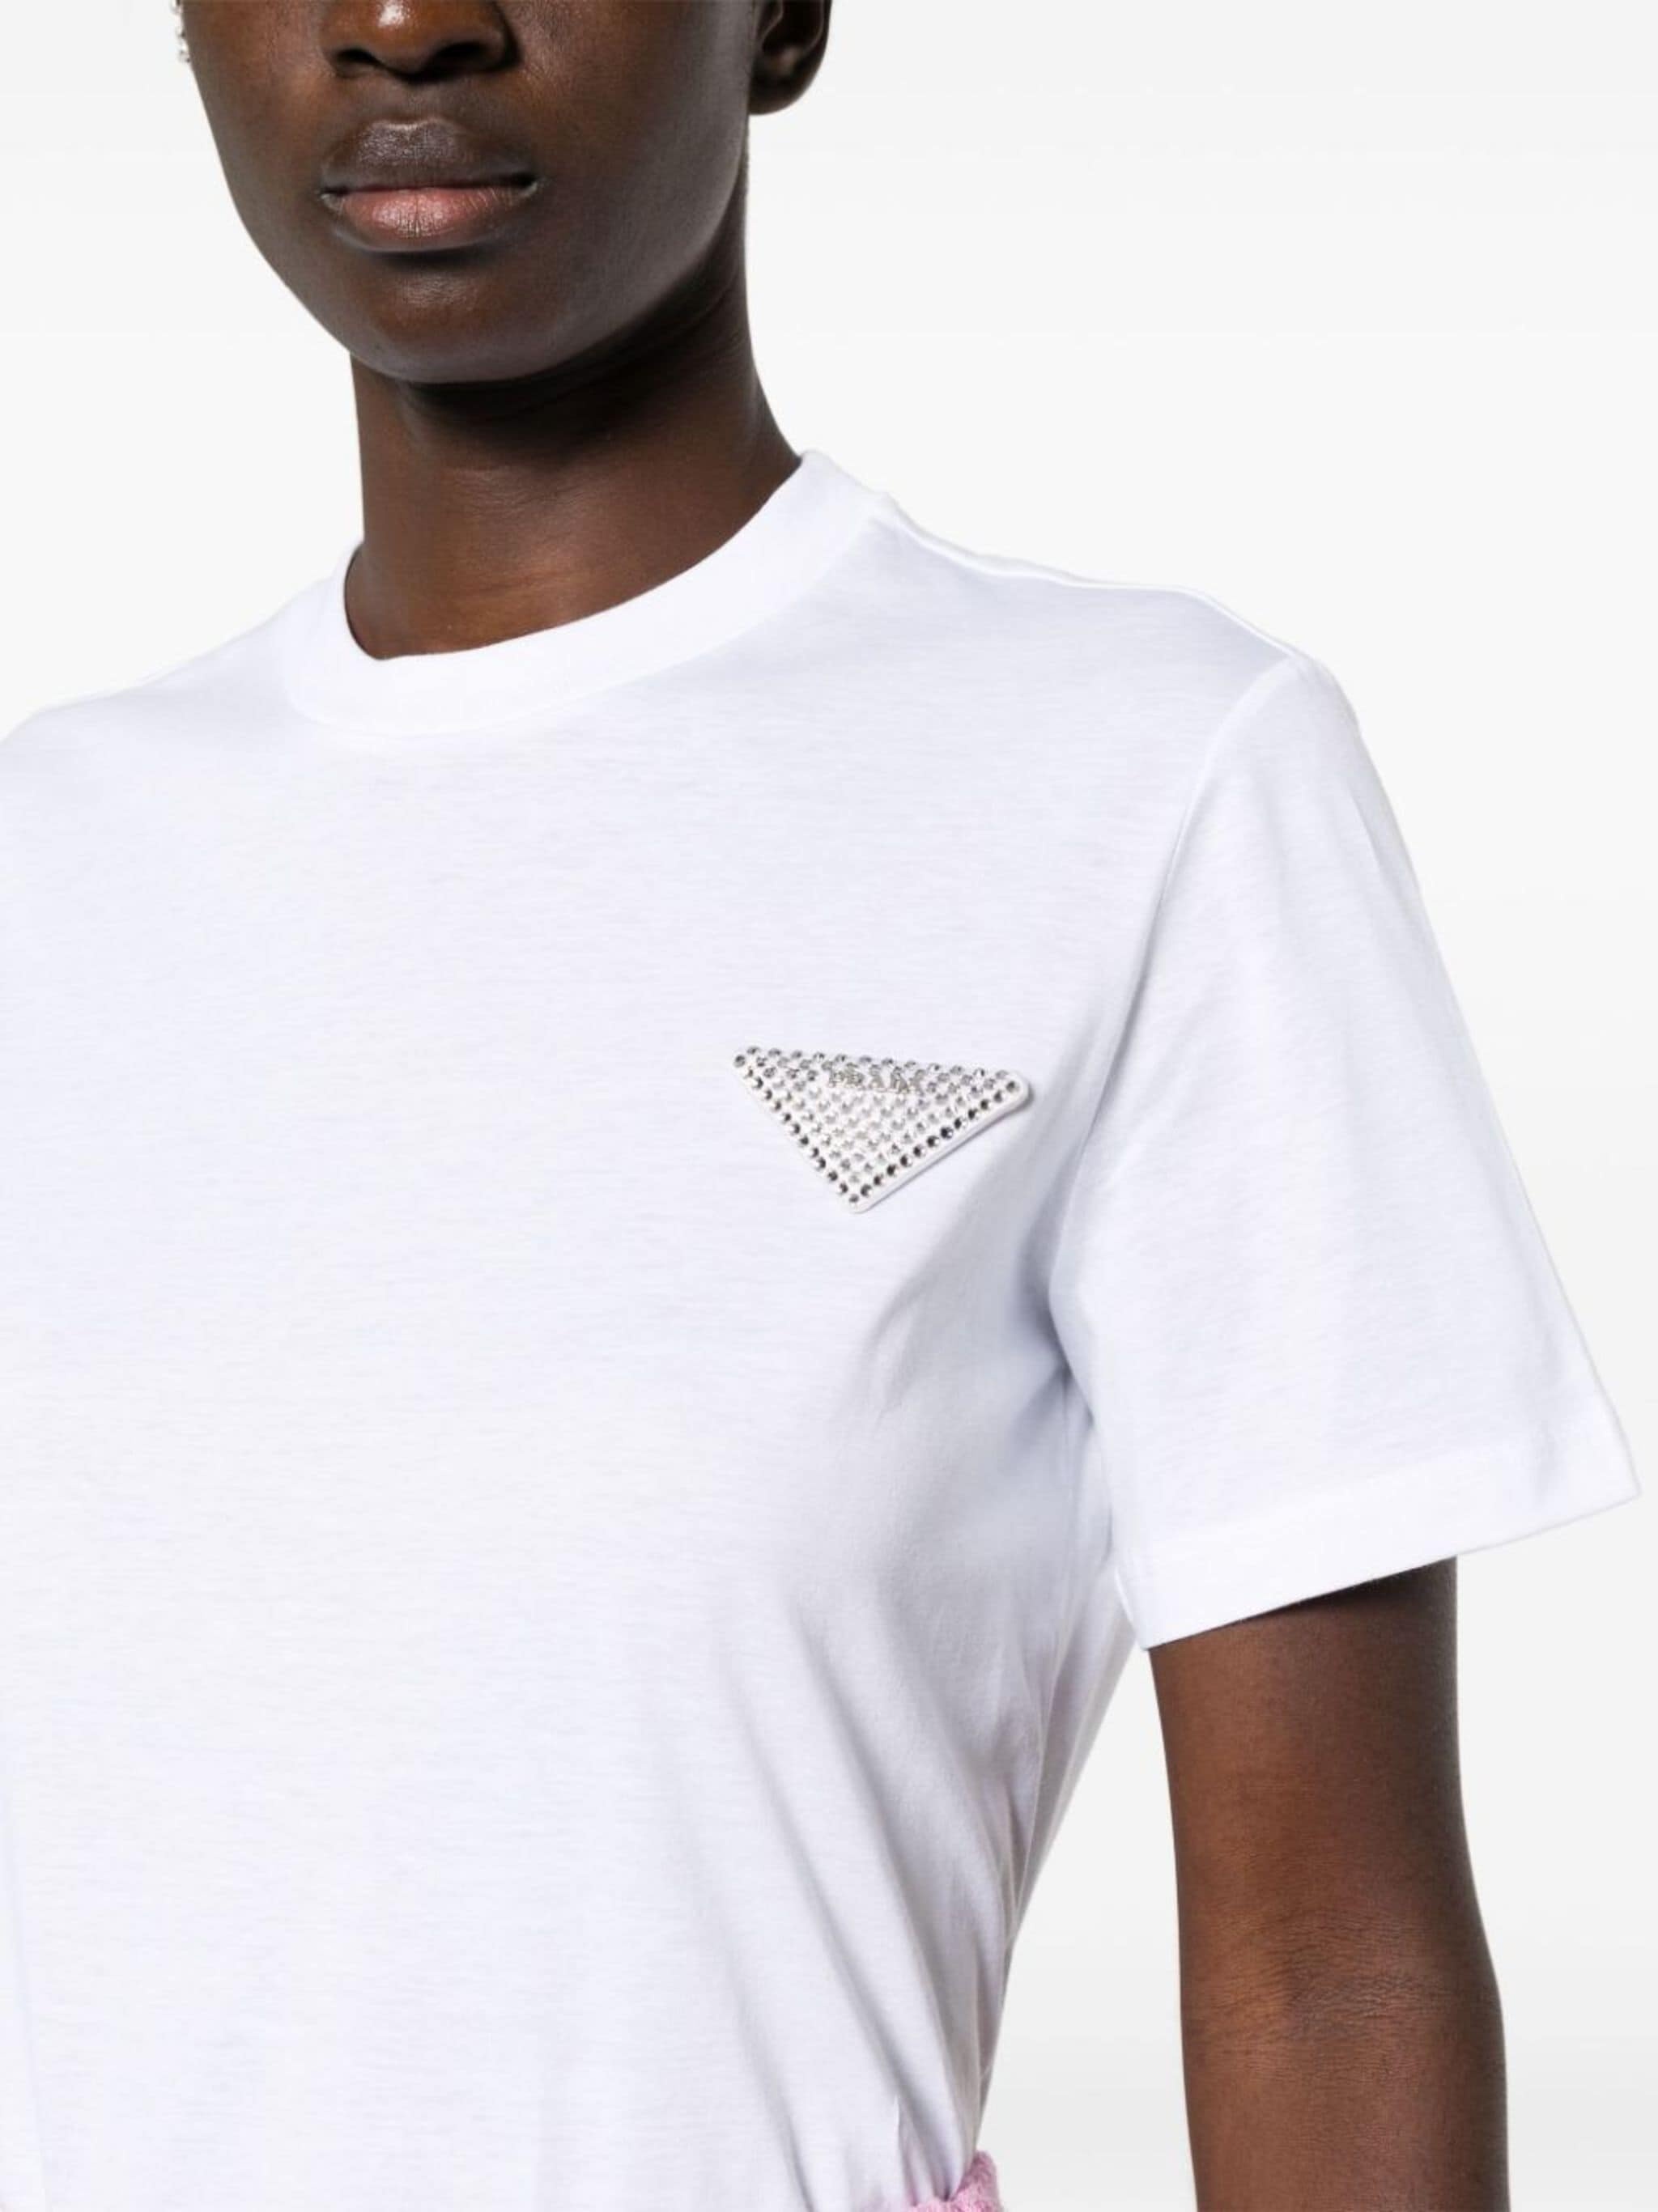 Prada crystal-embellished triangle logo T-shirt | REVERSIBLE